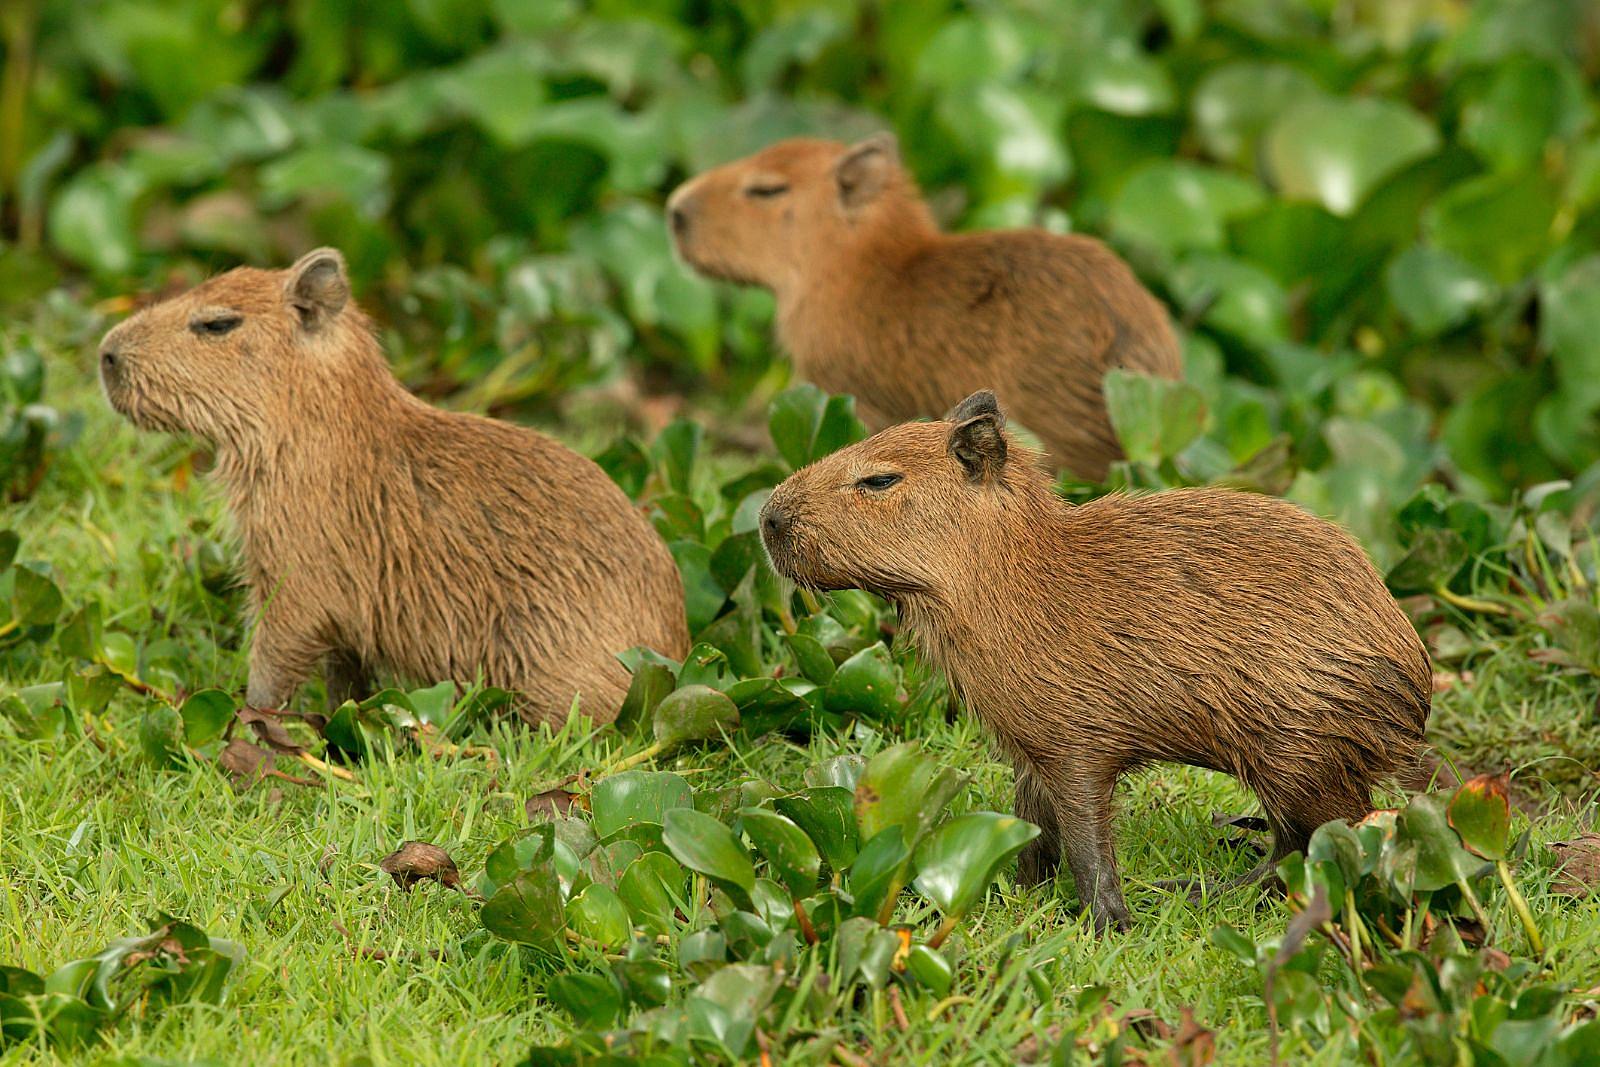 Hang Out With Capybara Babies at the Snake Farm!